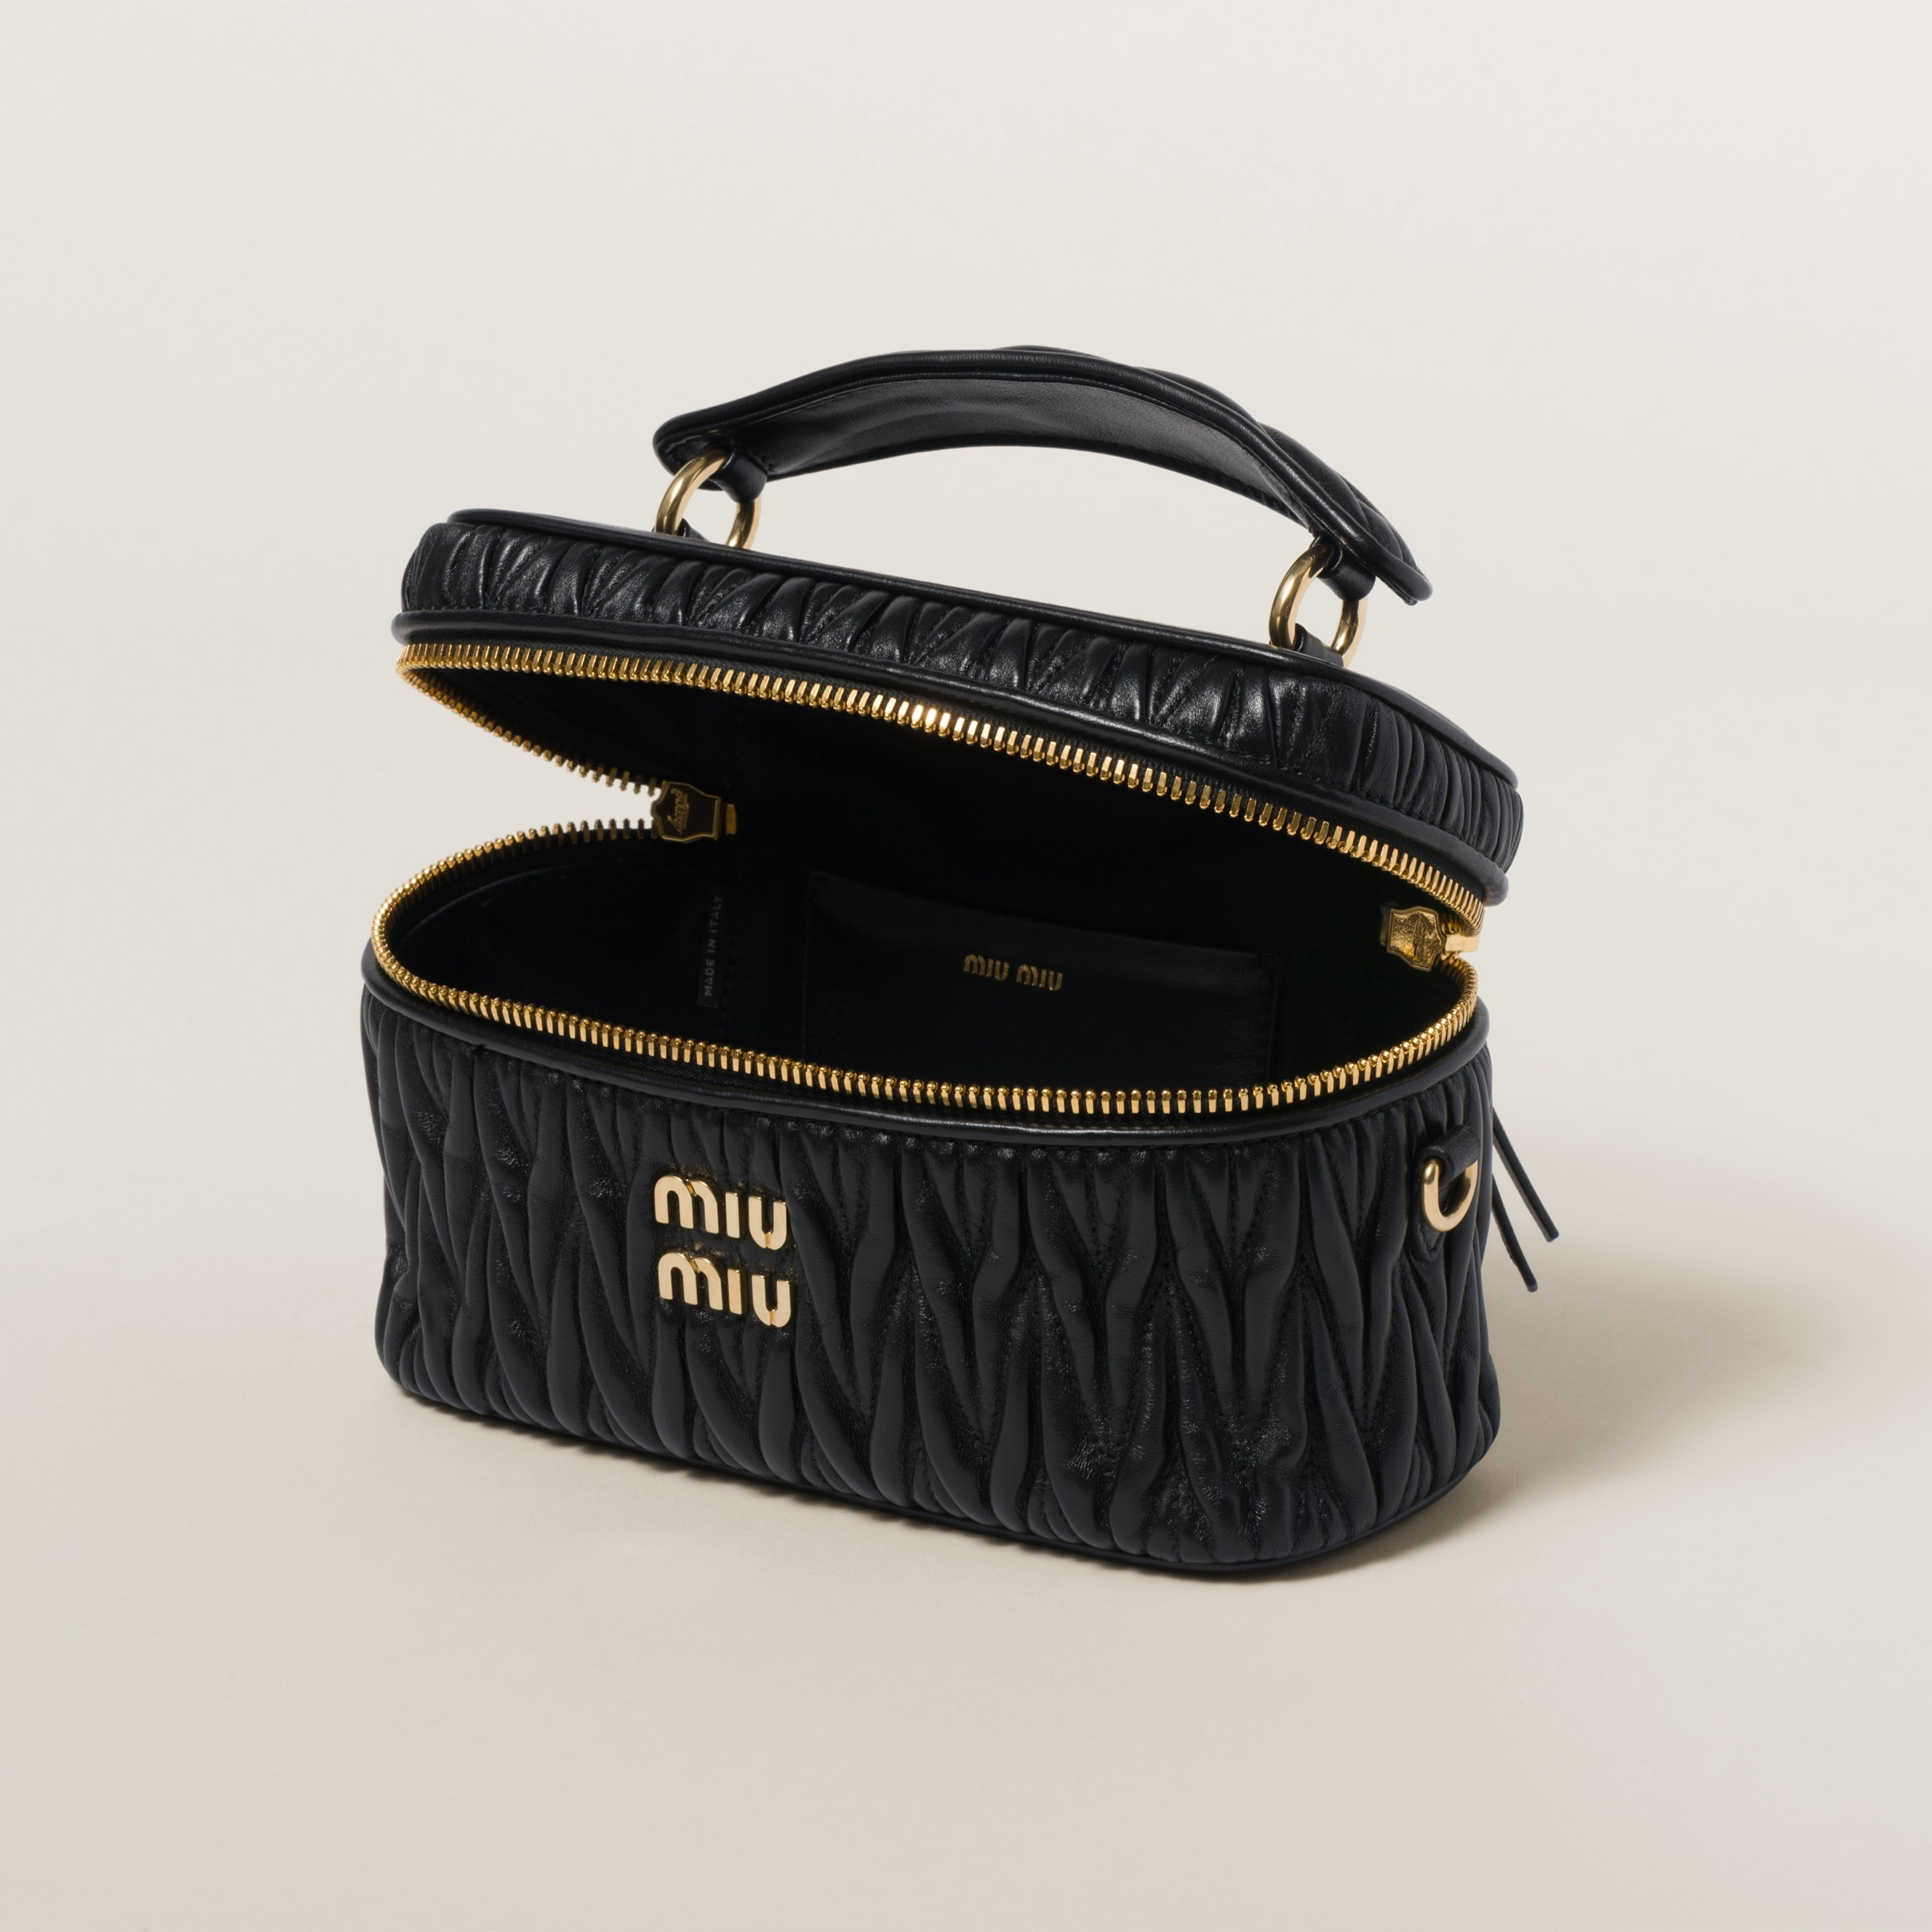 Miu Miu Has A New Regenerated Nylon Bag Called The Miu Wander